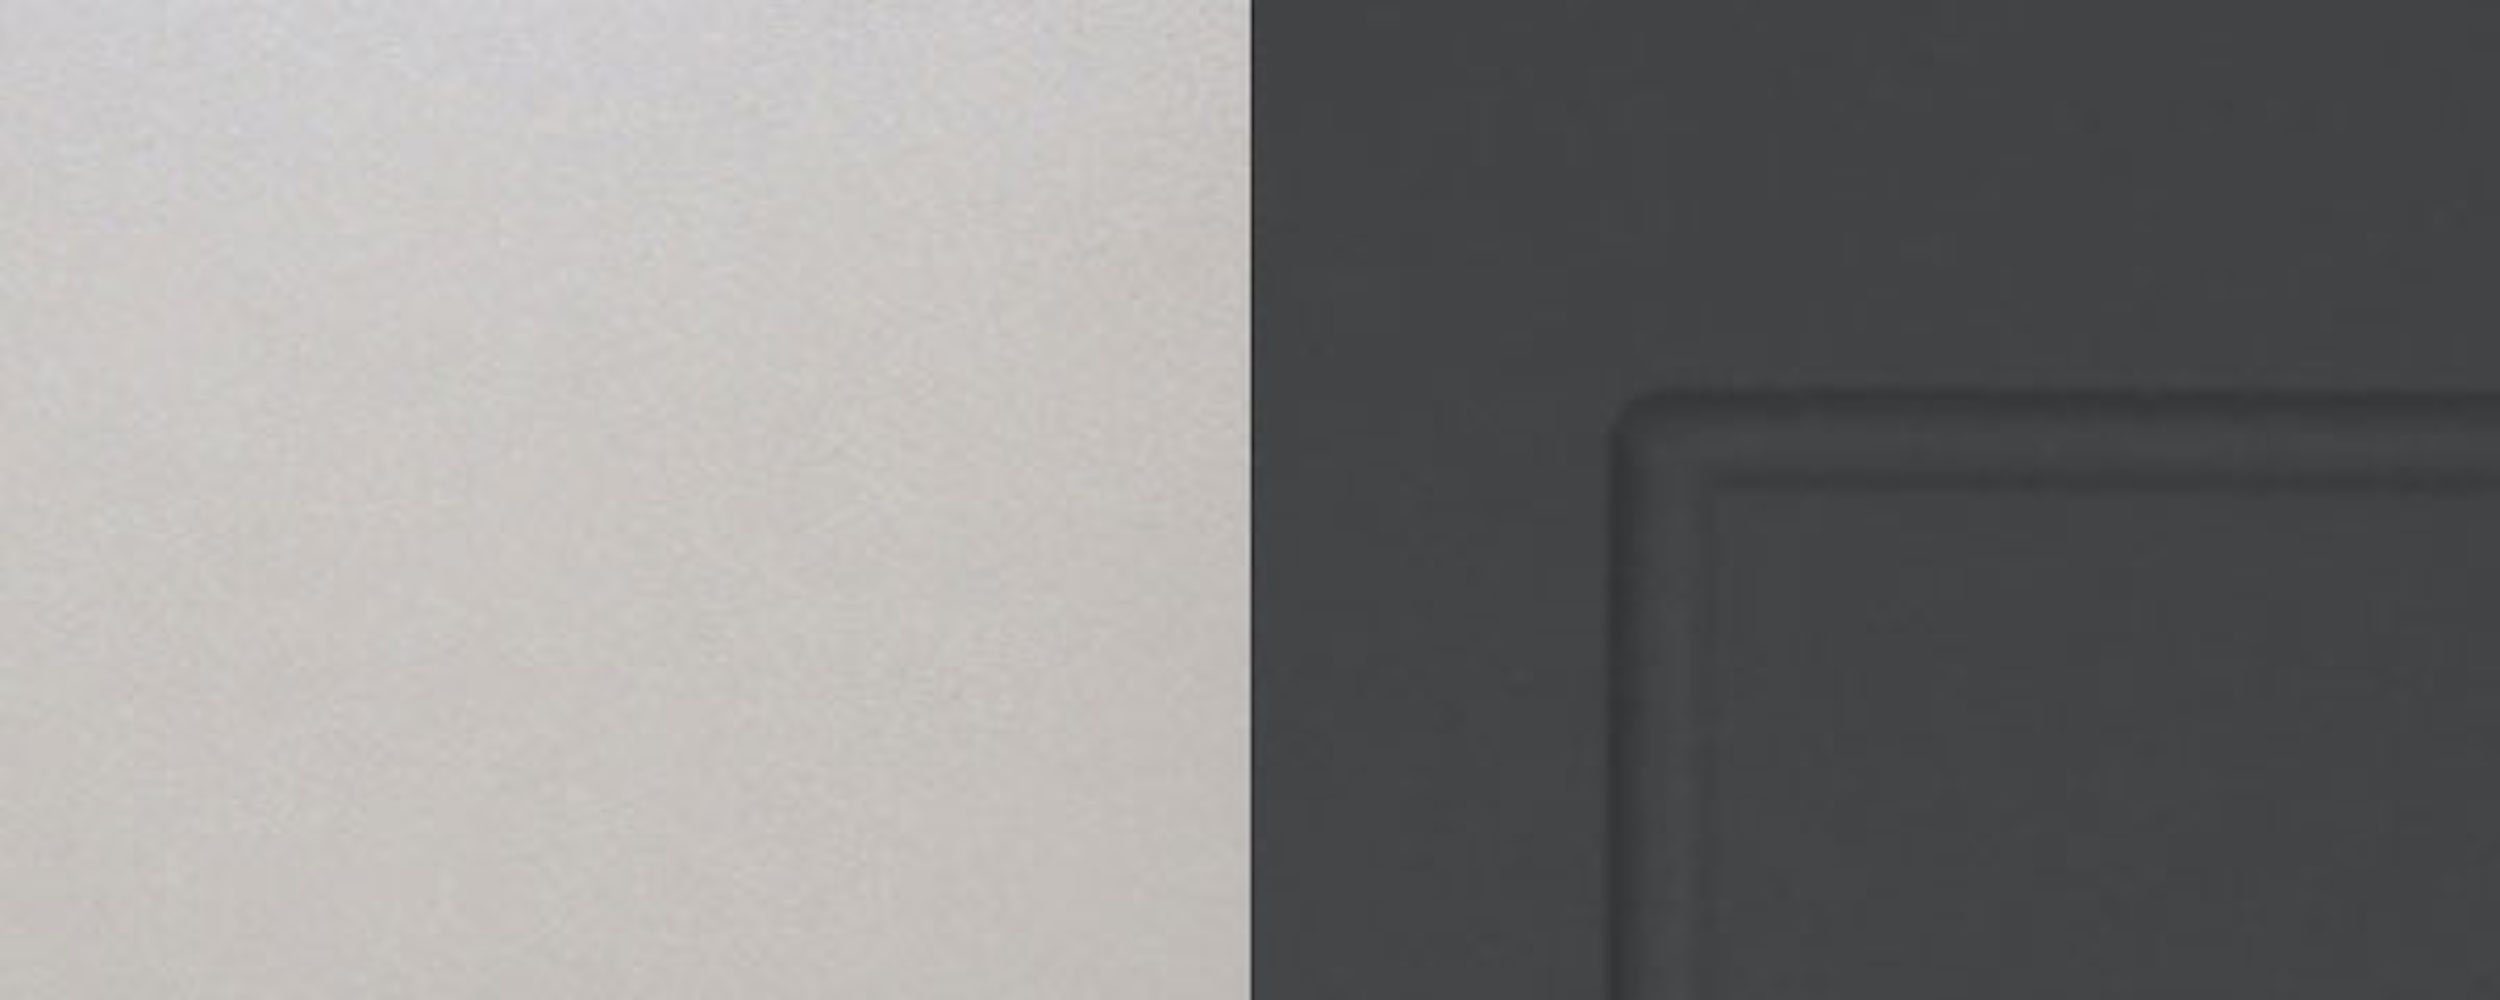 80cm wählbar Feldmann-Wohnen (Kvantum) Unterschrank & graphit Korpusfarbe 3 matt Schubladen Front- Kvantum (Teilauszug)